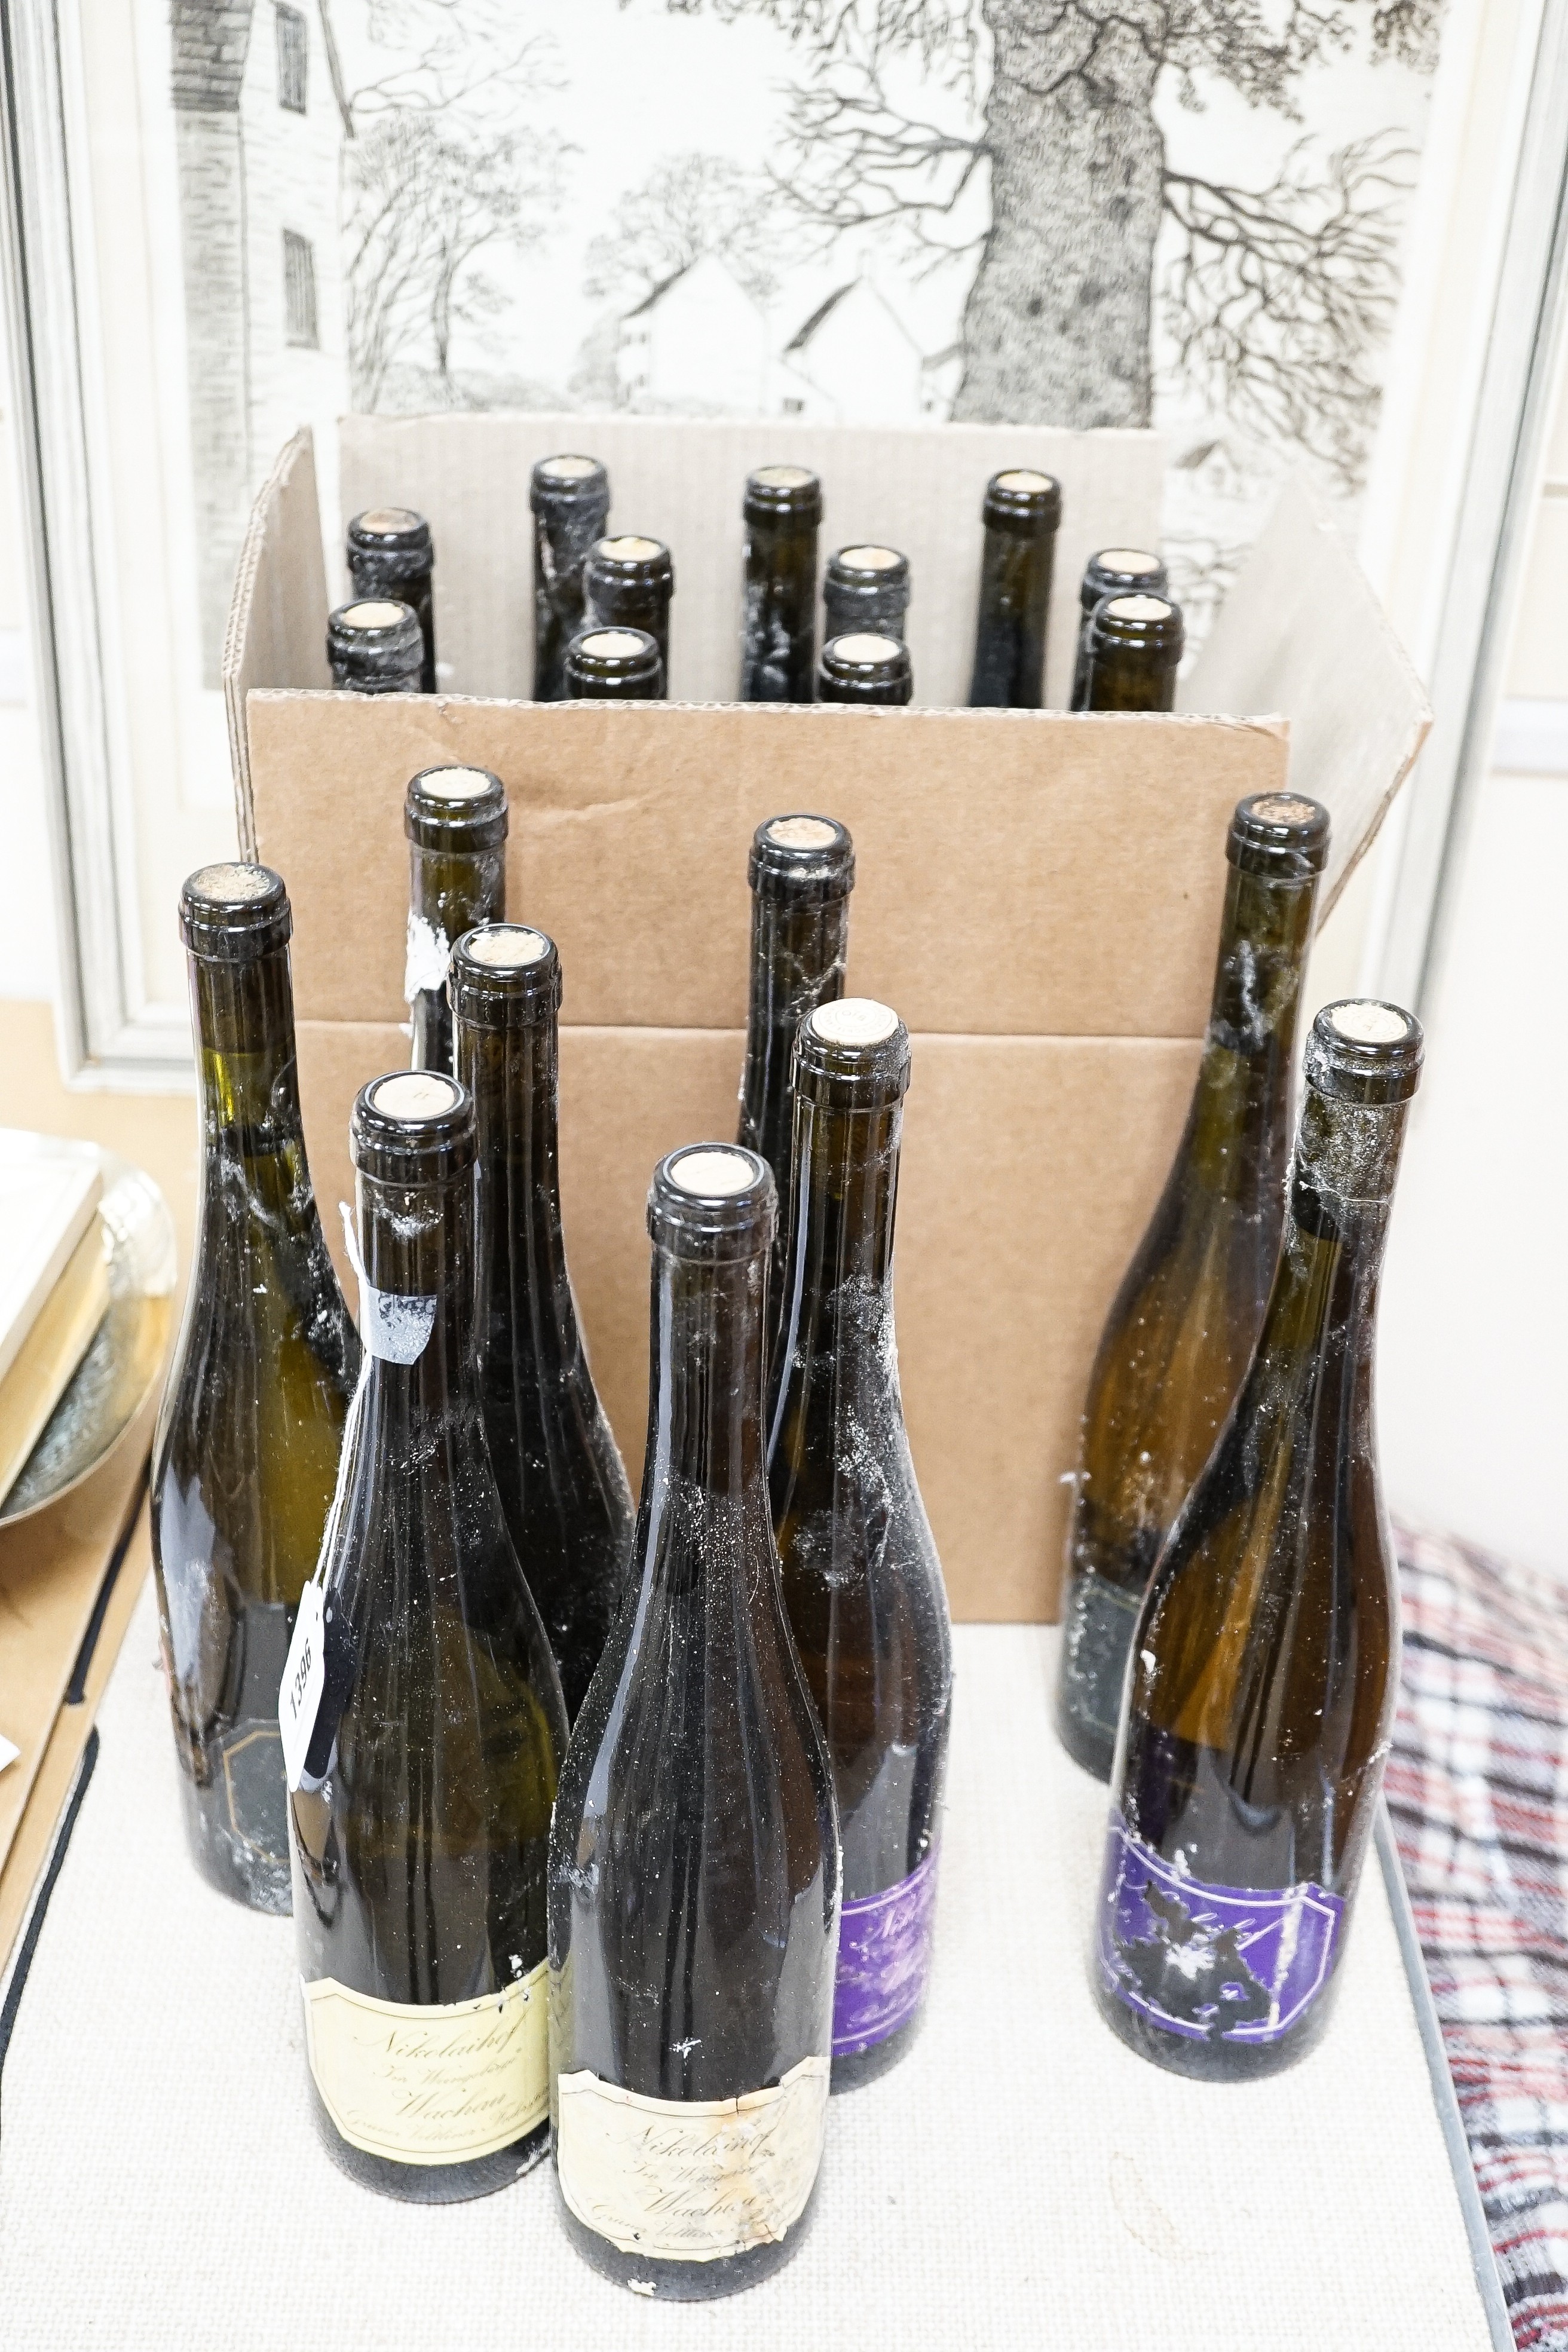 20 bottles of white Riesling wine